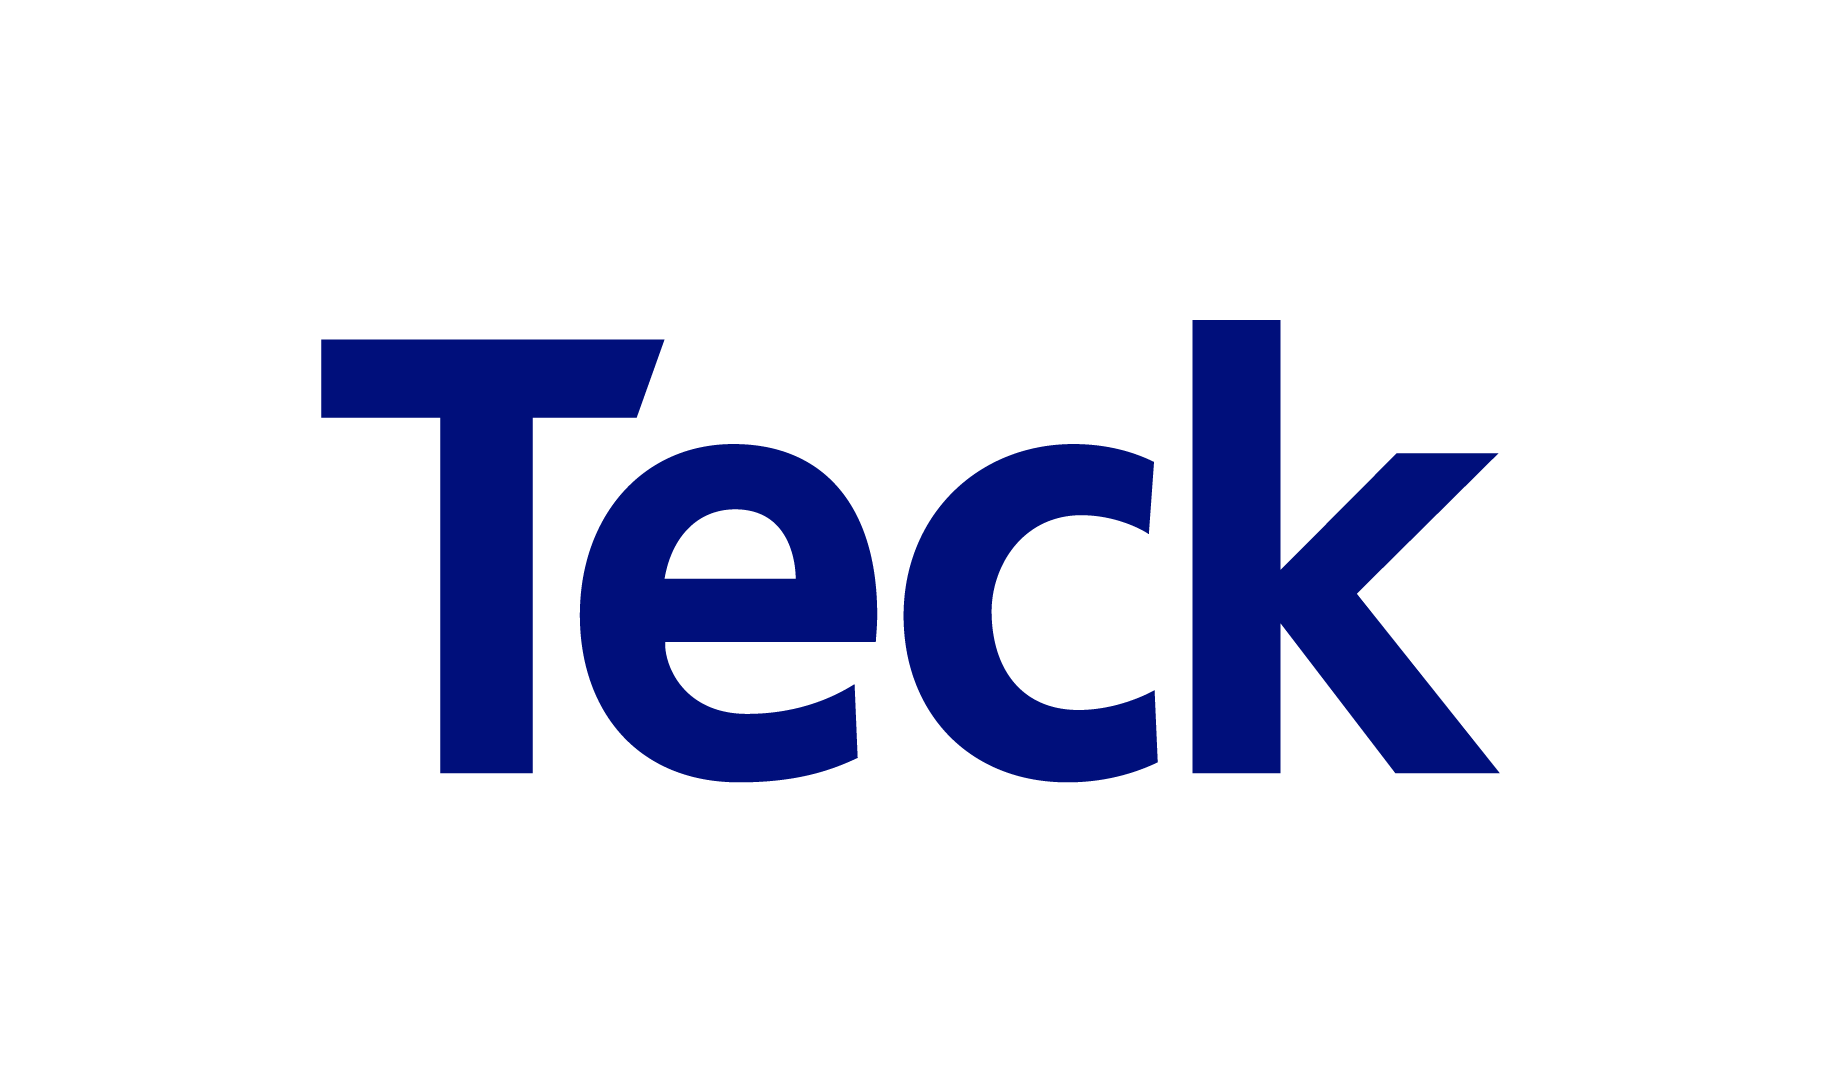 Teck Resources Ltd.